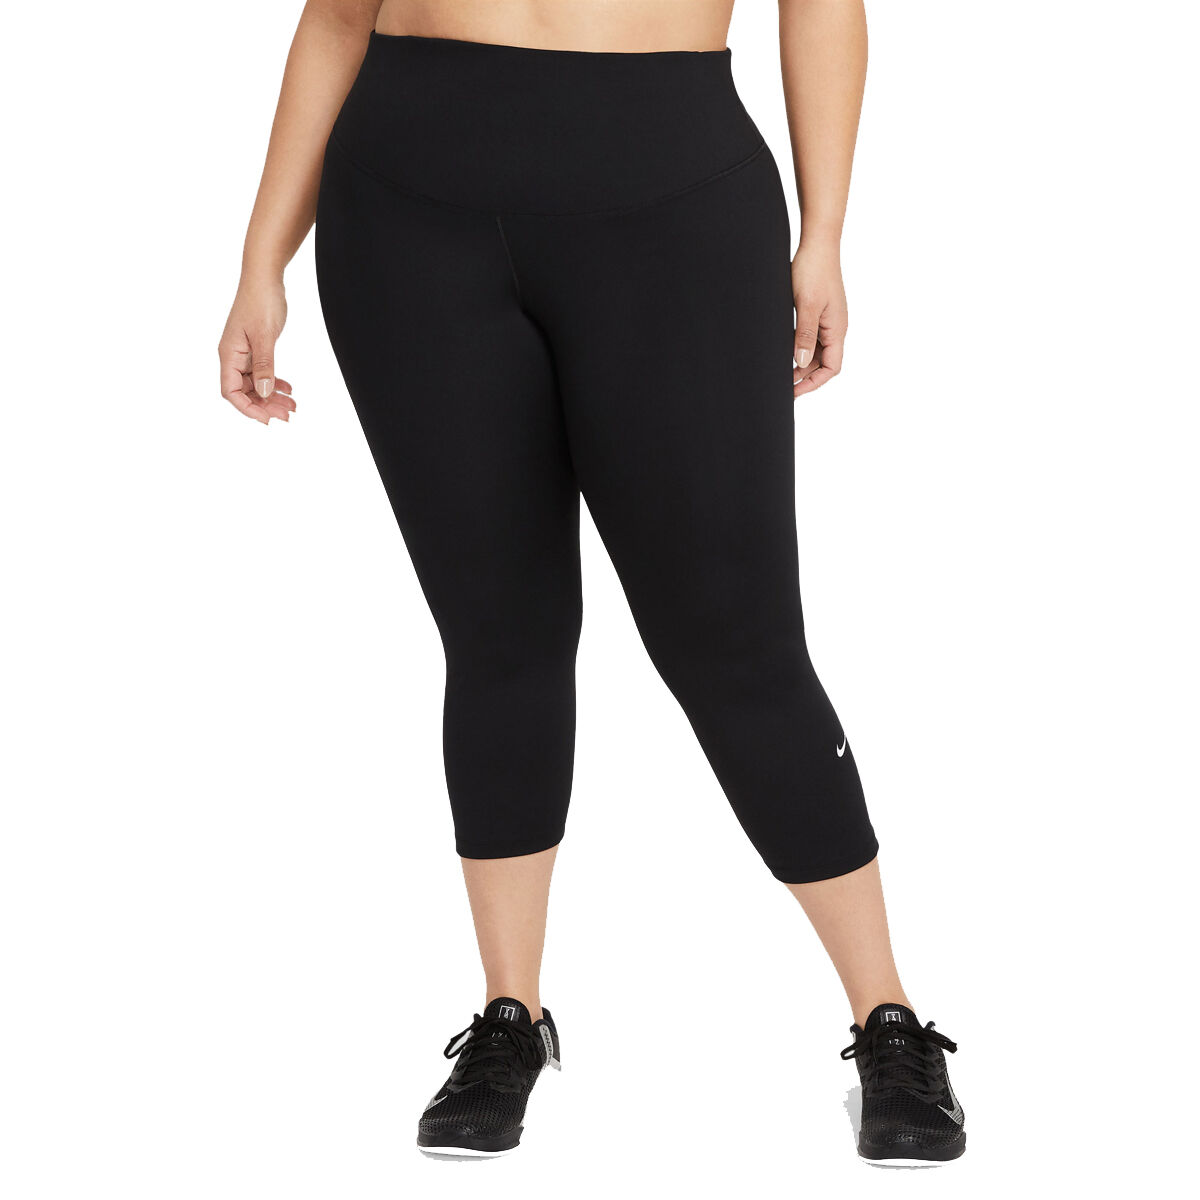 Nike Womens Pants Adult Plus Size 2X Black Tights Training Leg A See